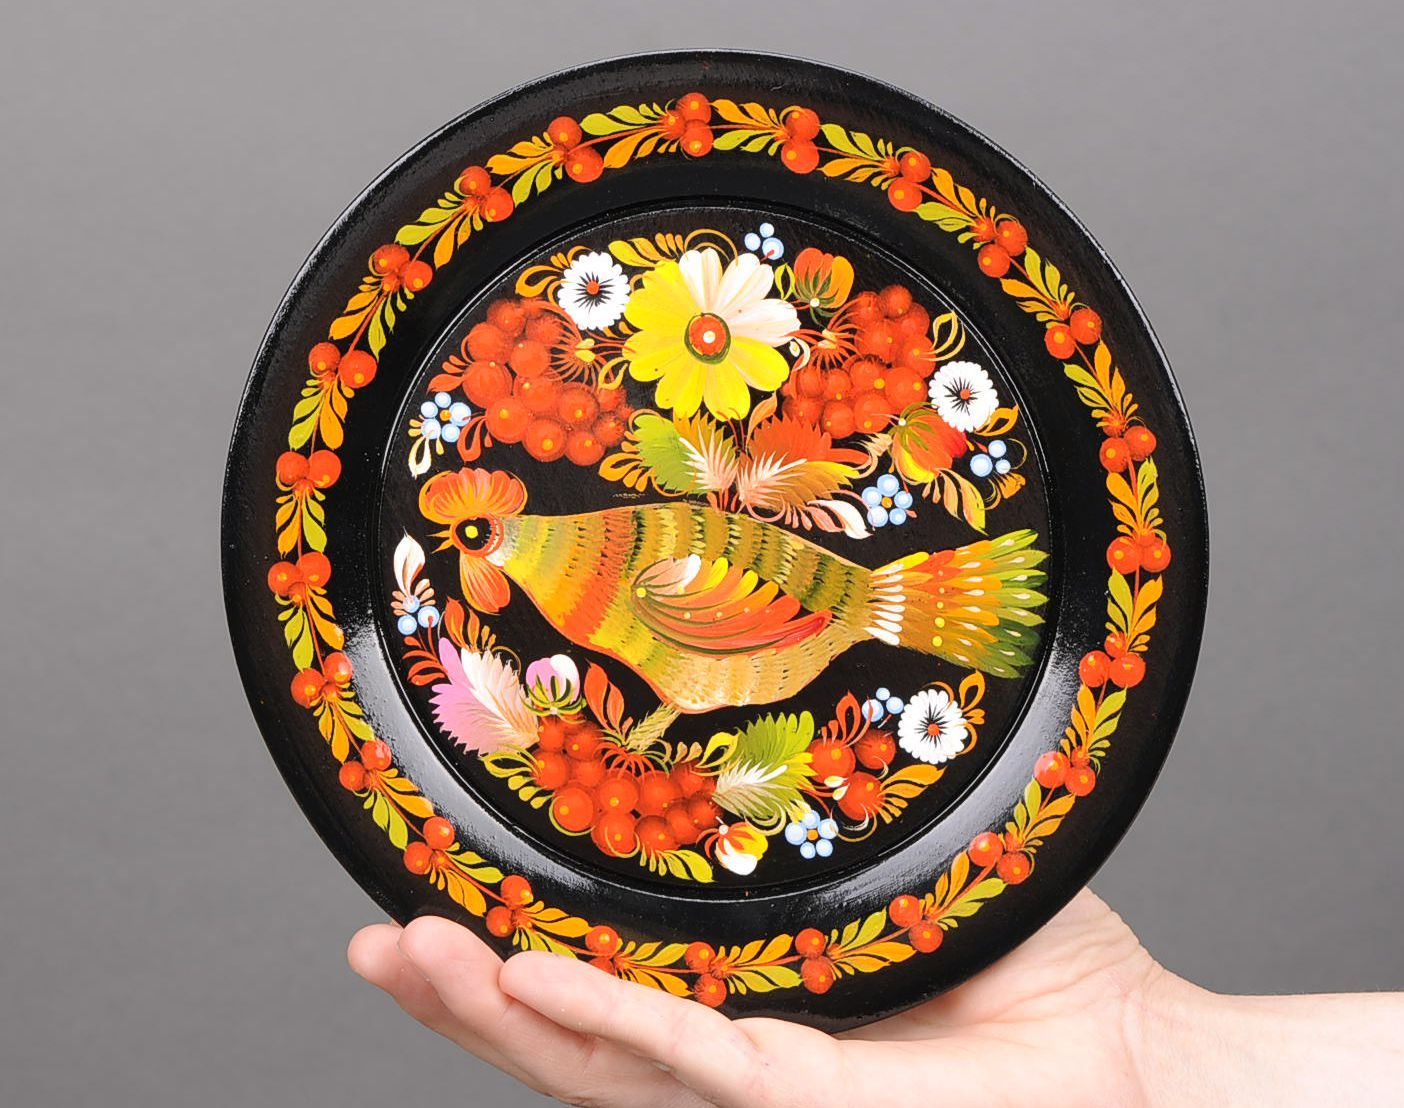 Декоративная тарелка расписаная вручную фото 5